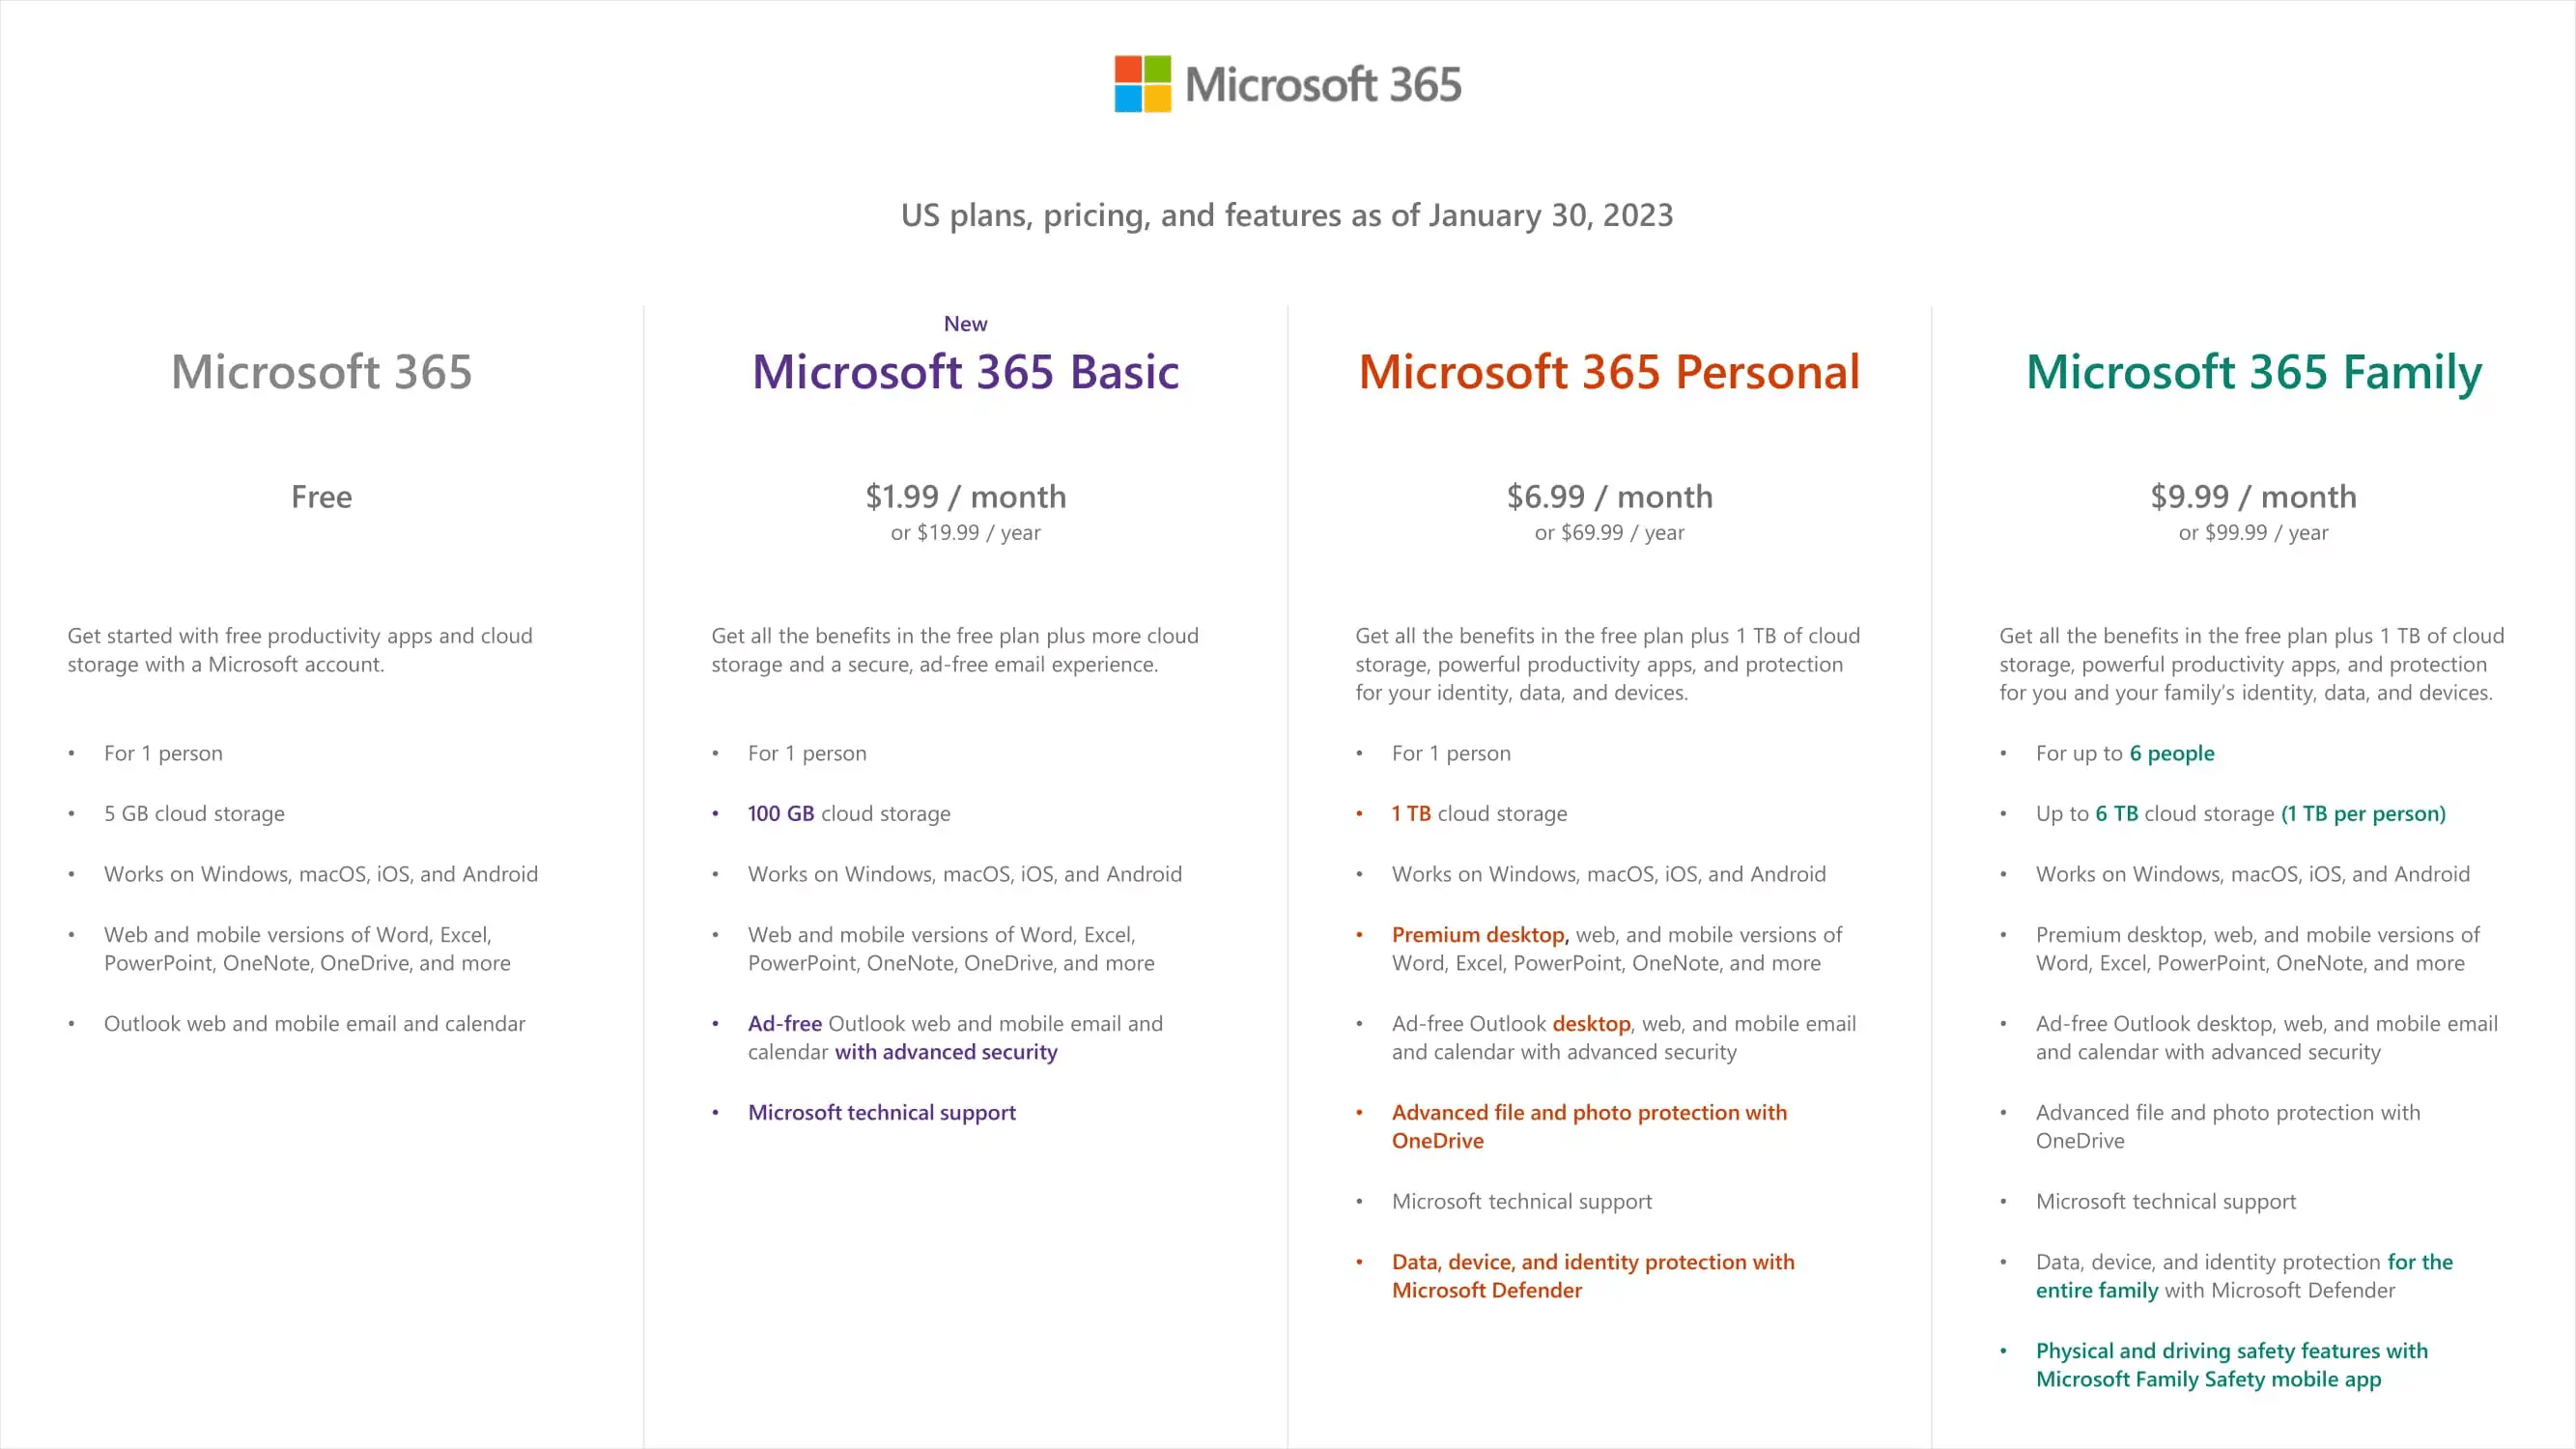 Windows 11 Pro + Office 365 Pro 1 Tera Ondrive ( 5 Dispositivo )